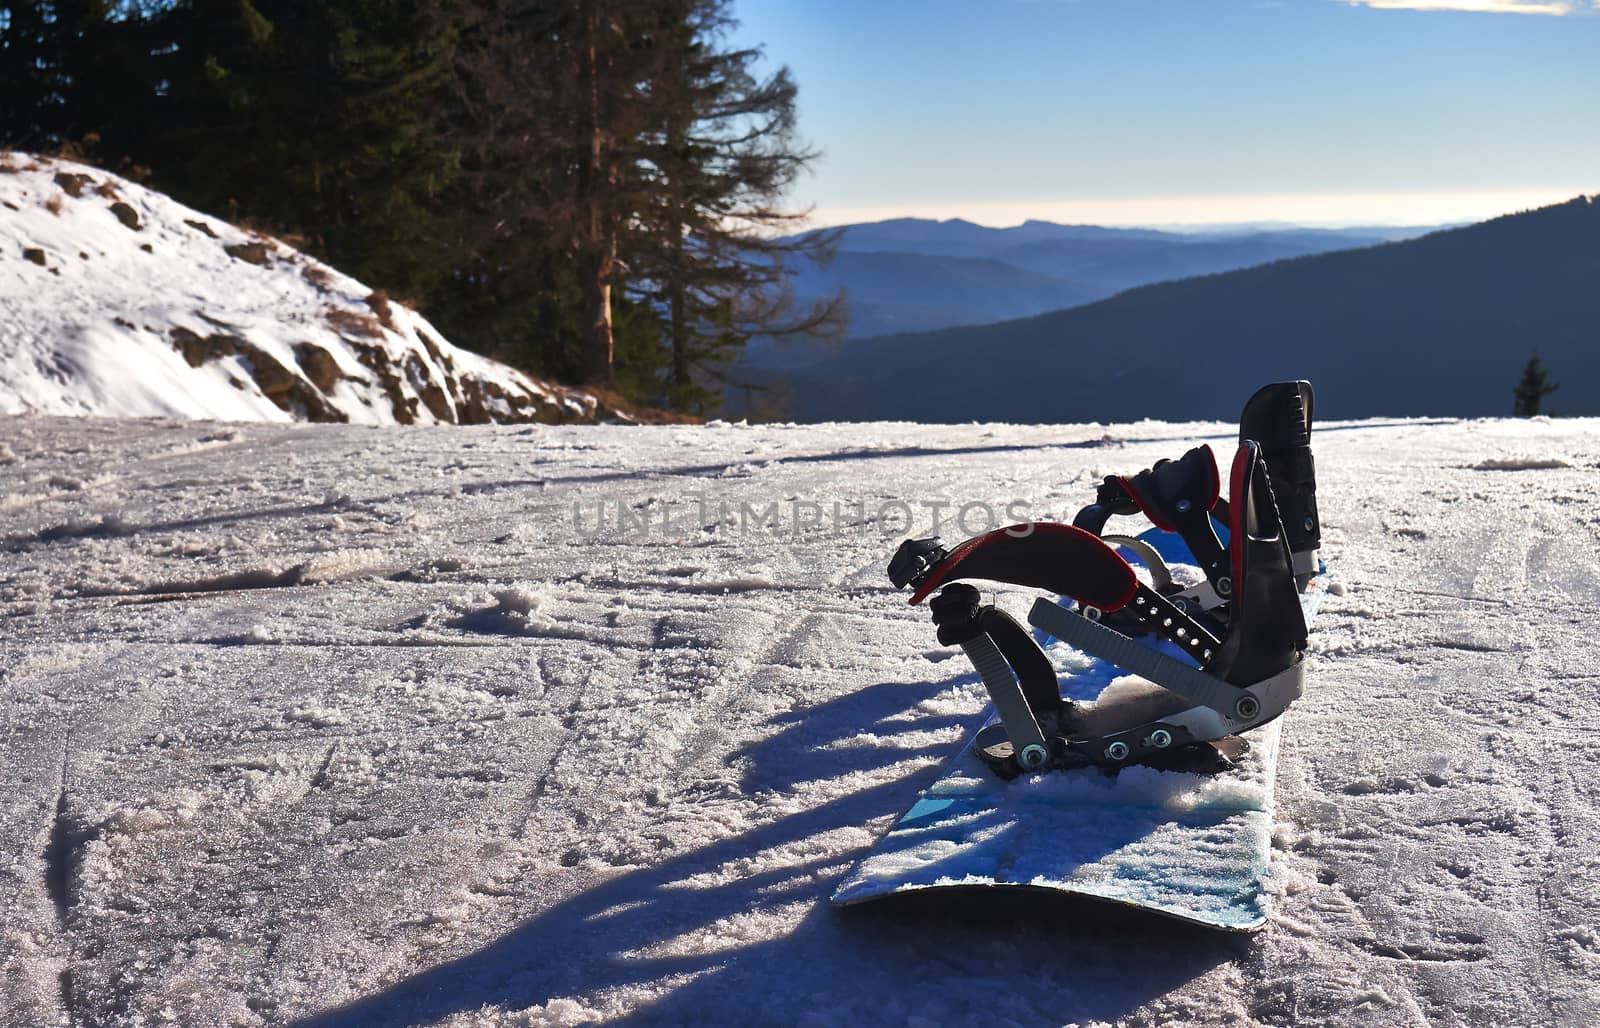 Winter sports. Snowboard on snow ski slope.   